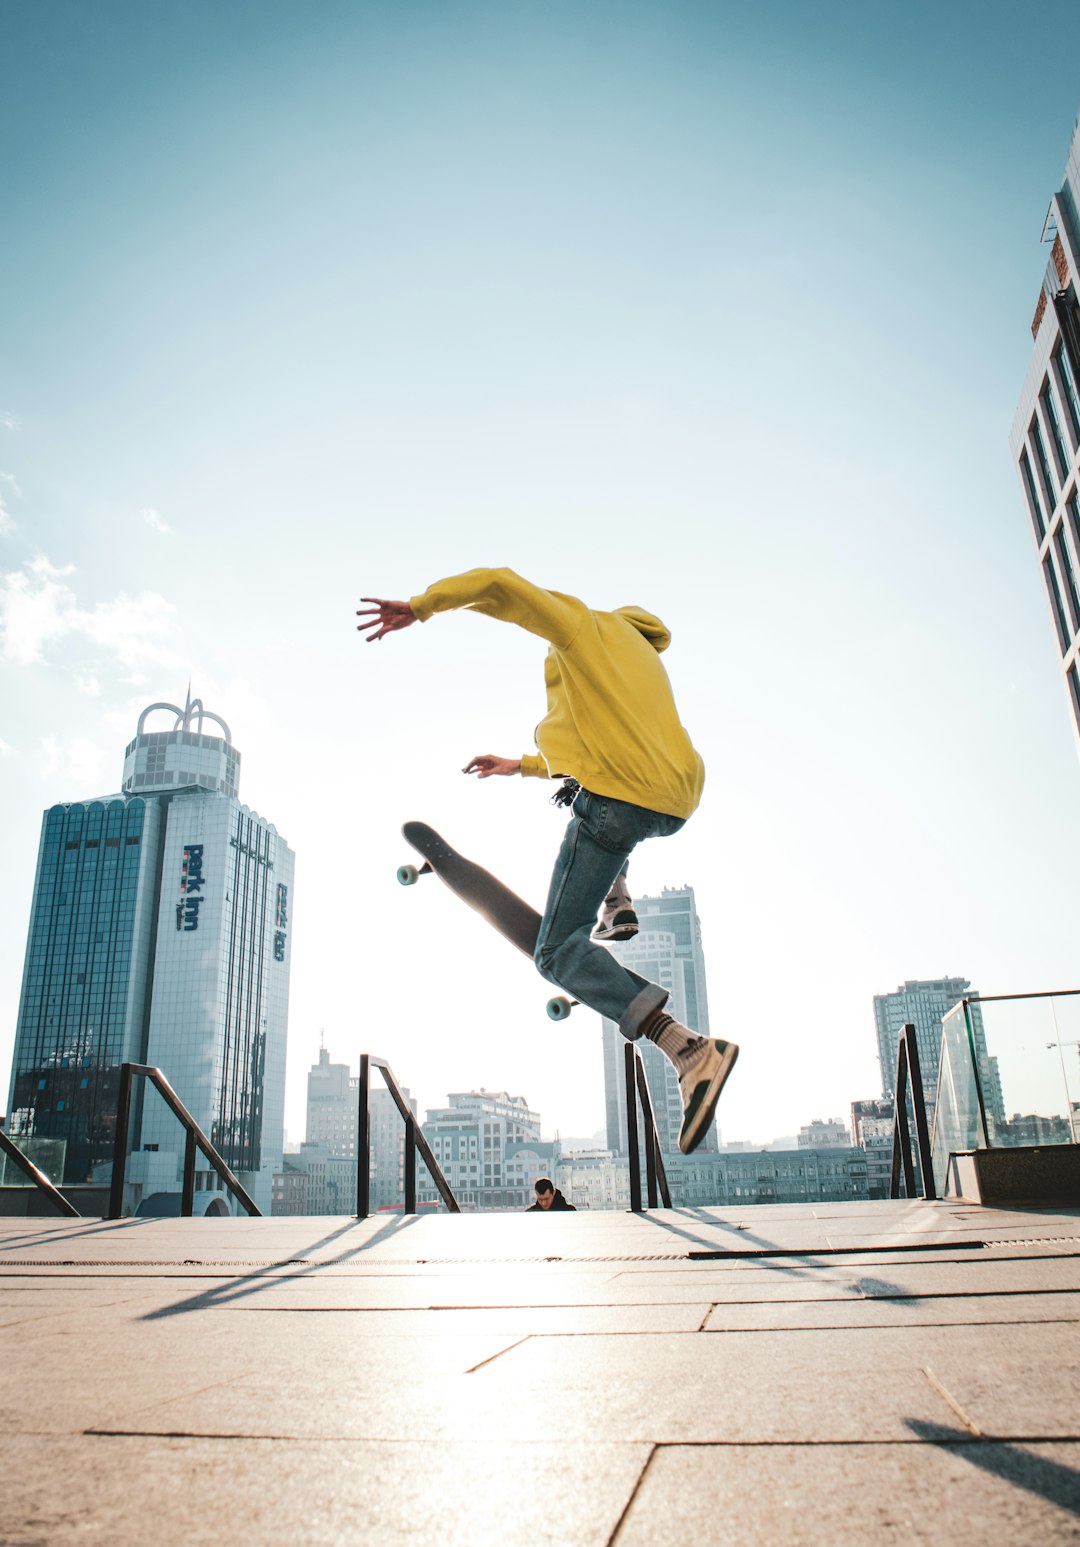 man doing tricks on skateboard during daytime